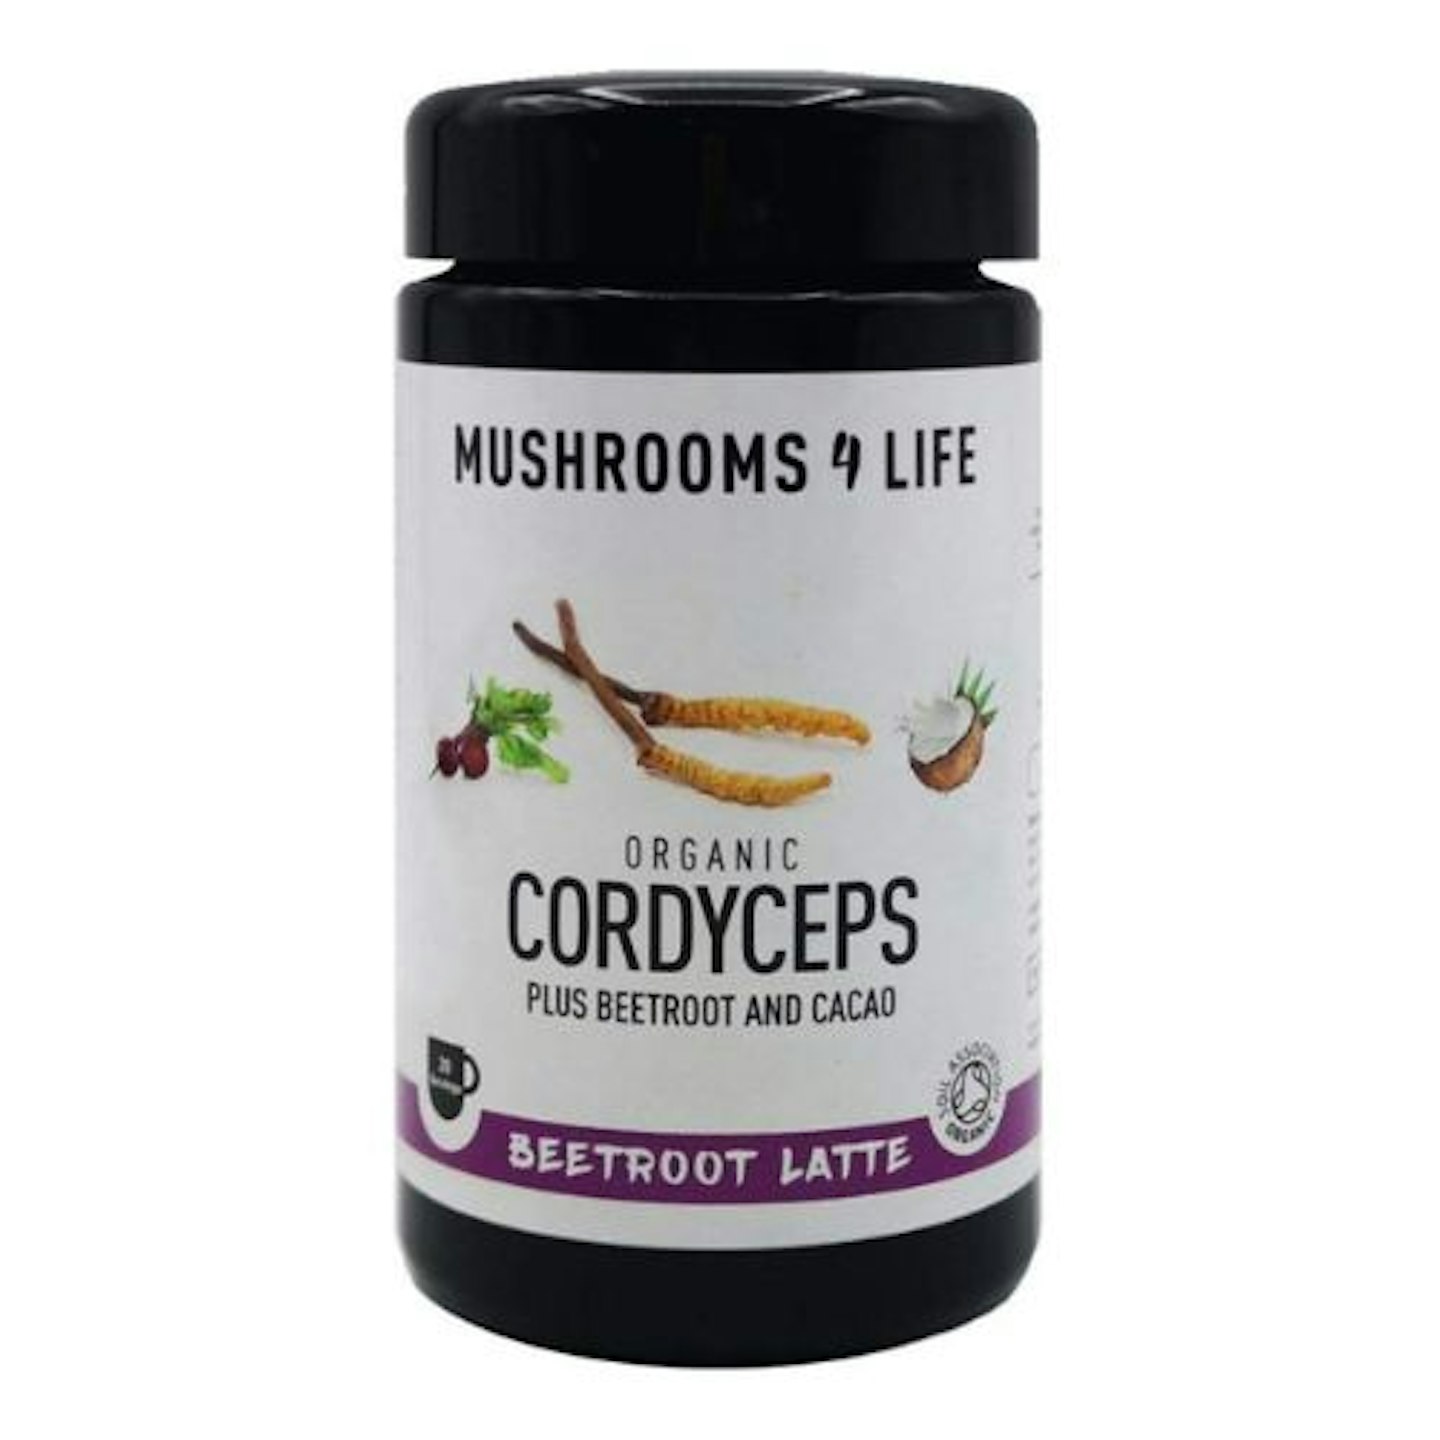 Mushrooms 4 Life Organic Cordyceps Beetroot Latte, 0.13 kg